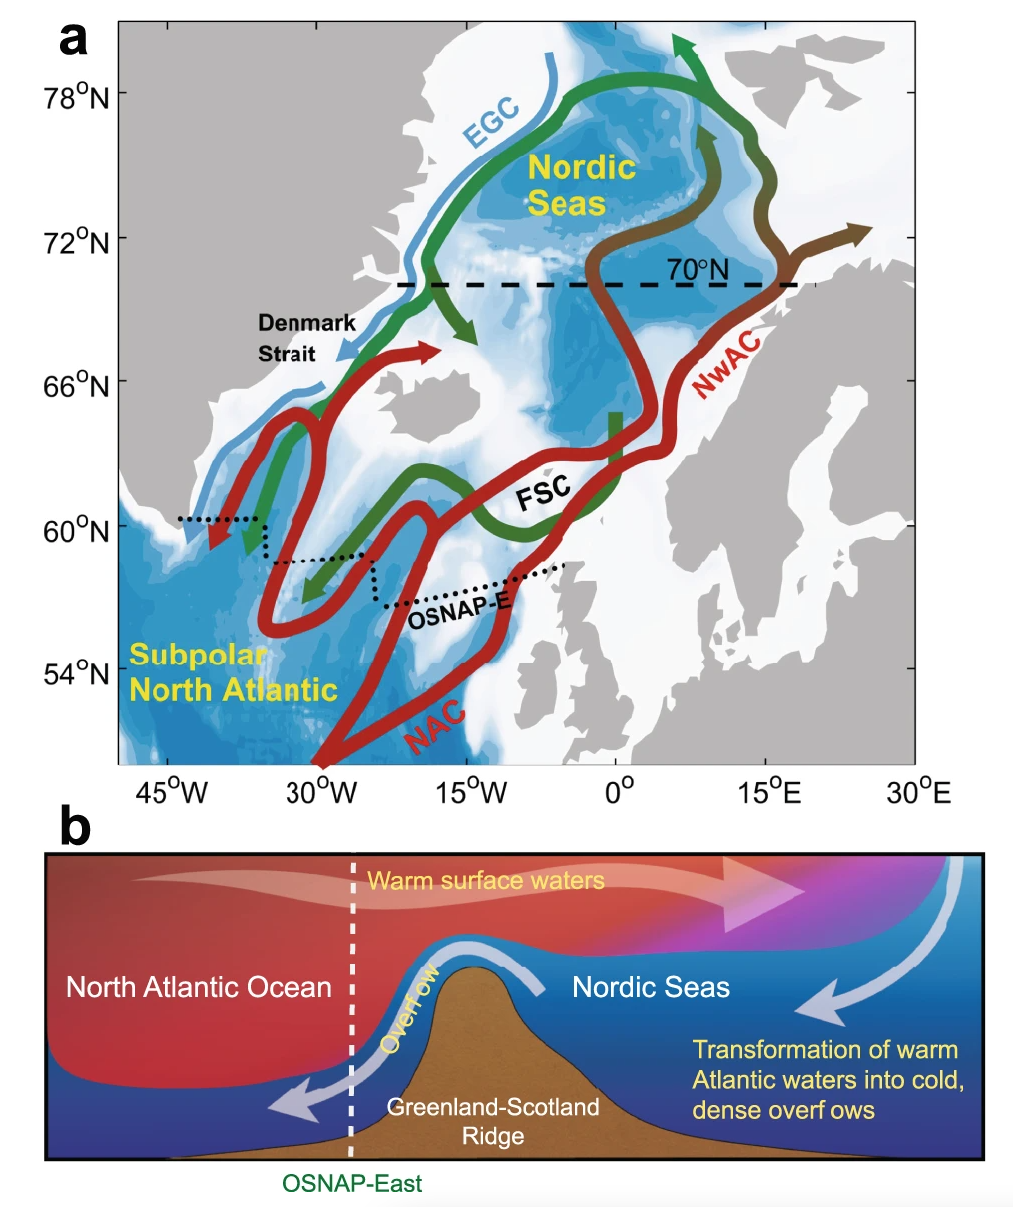 Schematic of the major ocean currents crossing the Greenland-Scotland Ridge (GSR).